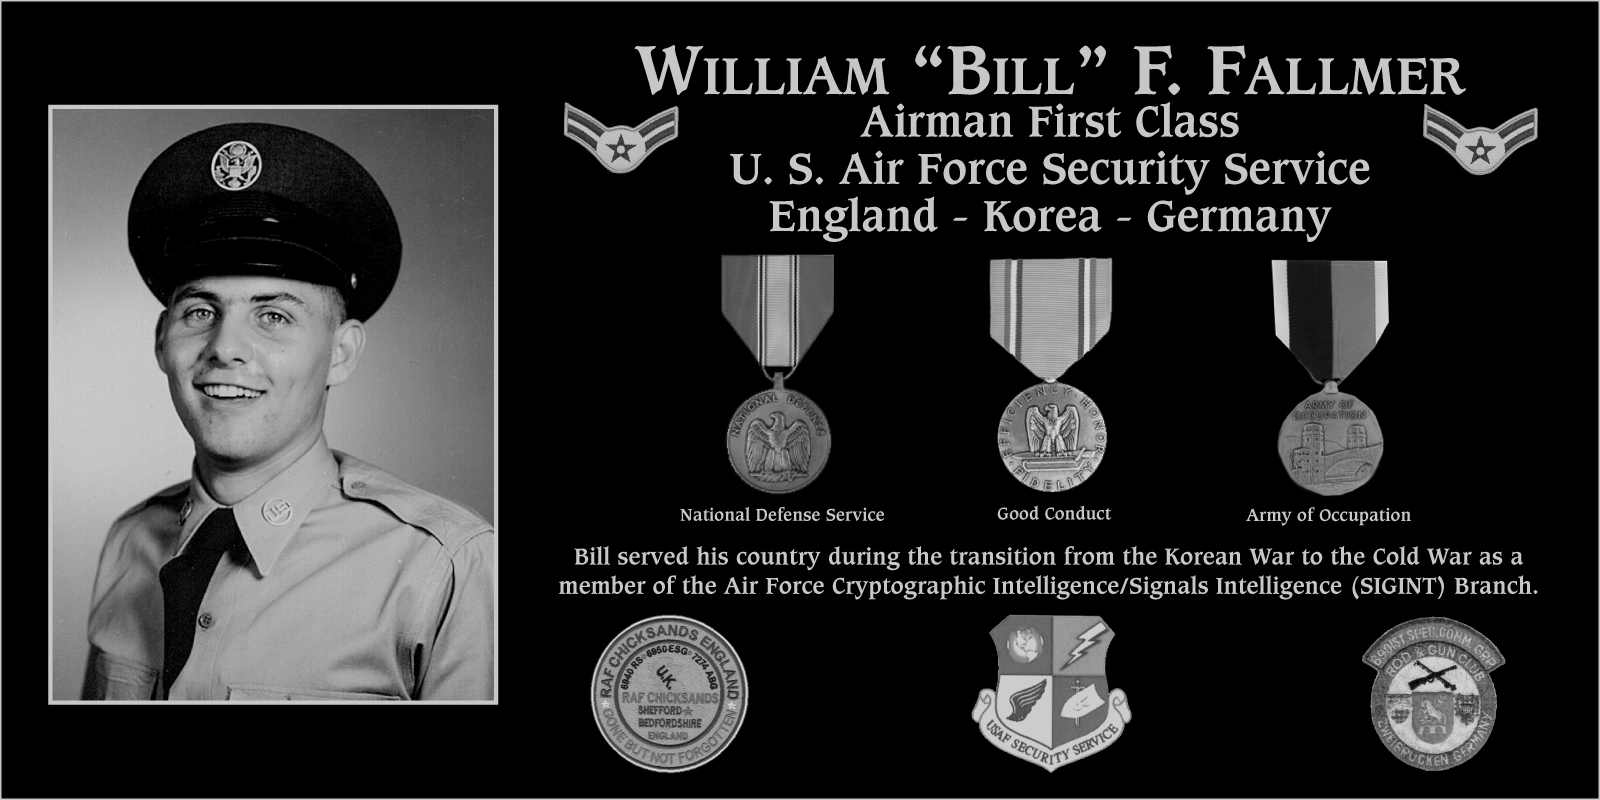 William F. “Bill” Fallmer